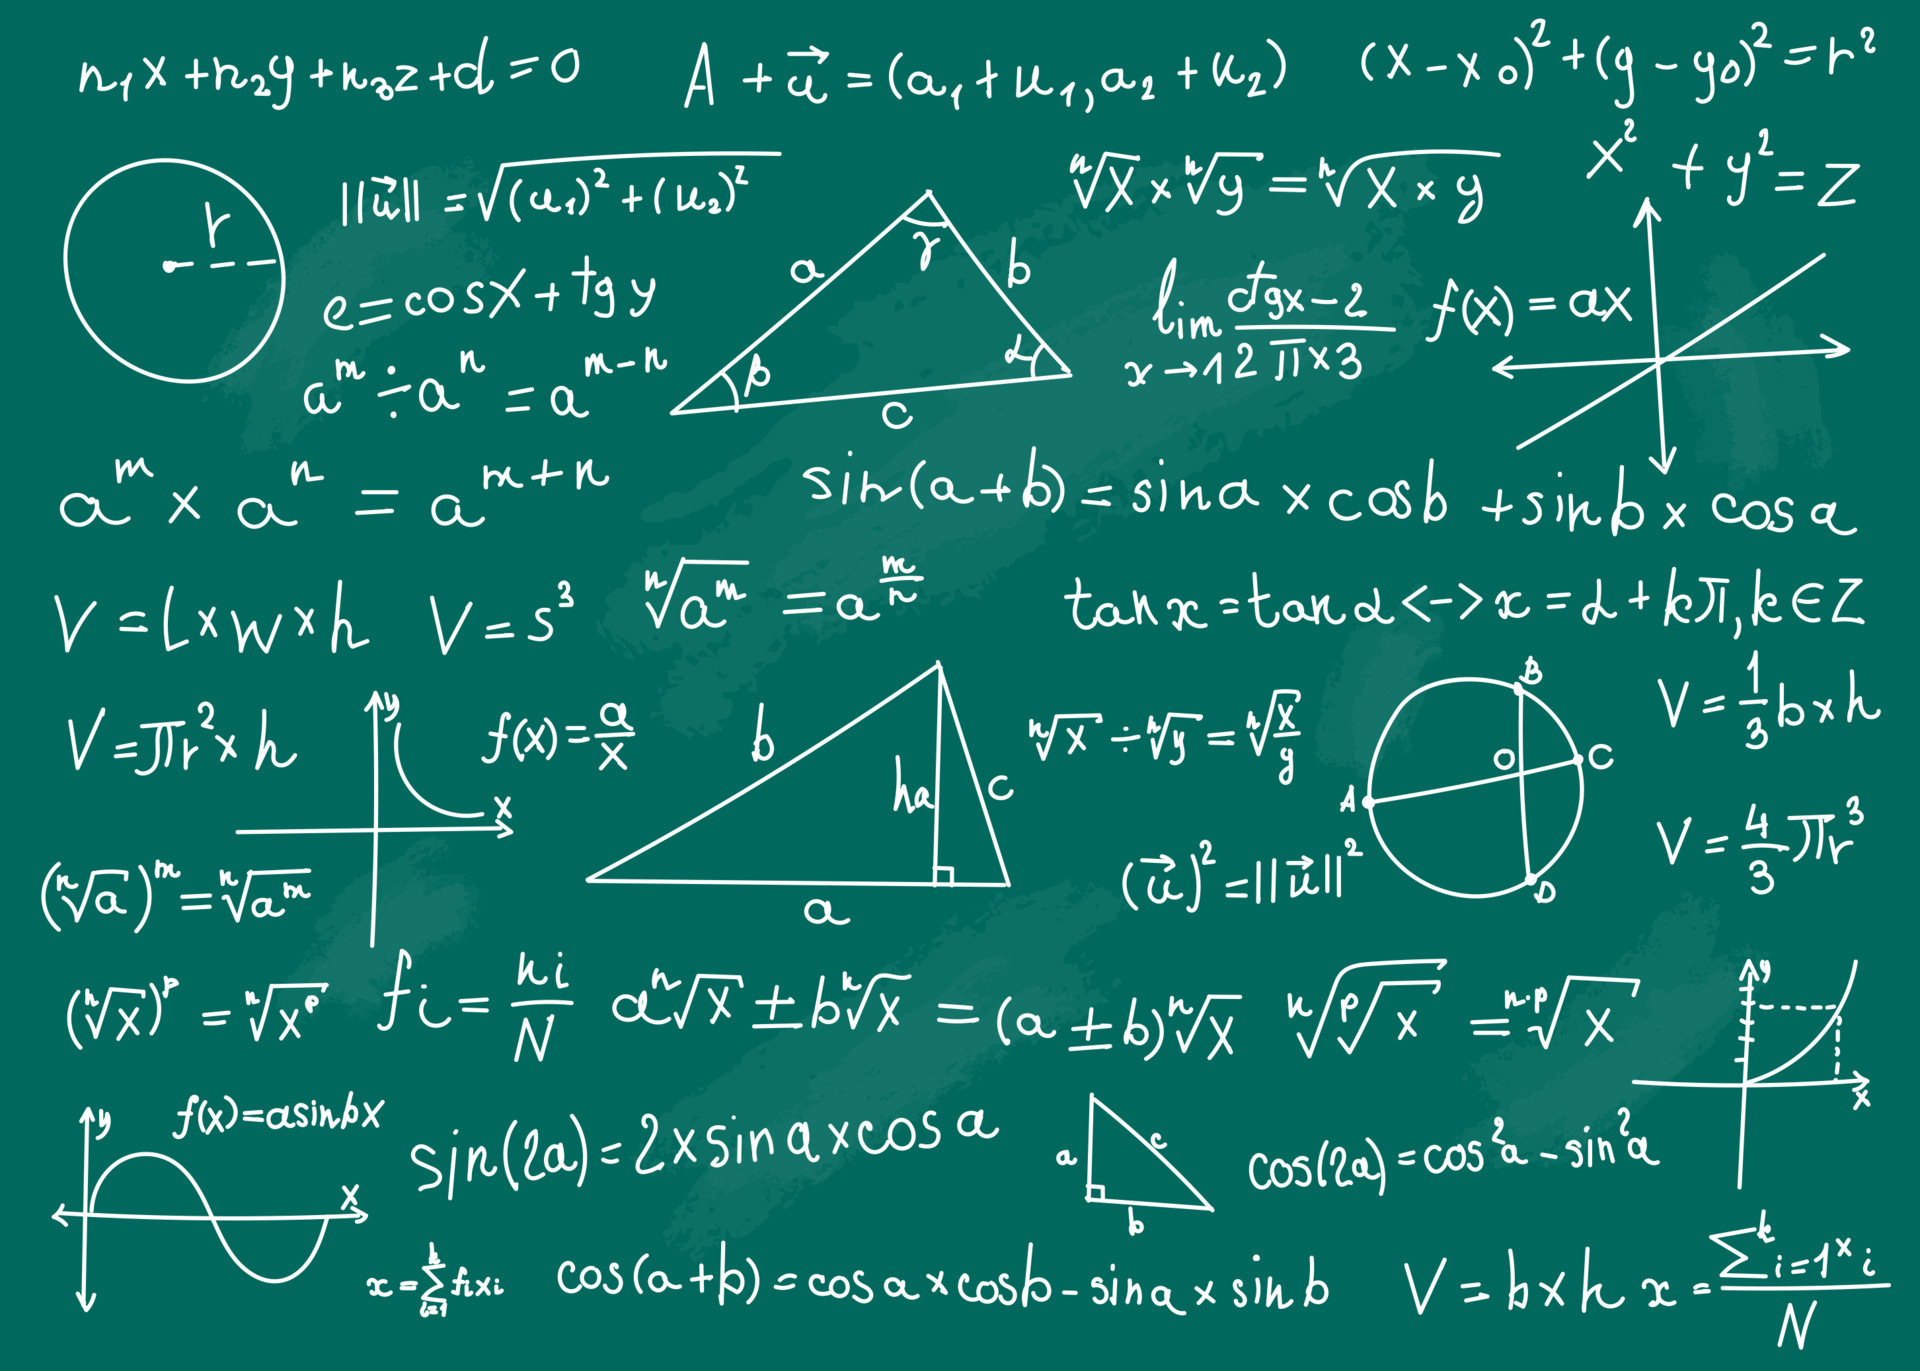 https://static.vecteezy.com/system/resources/previews/021/692/542/original/math-formulas-mathematical-formulas-on-green-school-chalkboard-handwritten-scientific-math-equations-theories-or-calculations-background-vector.jpg